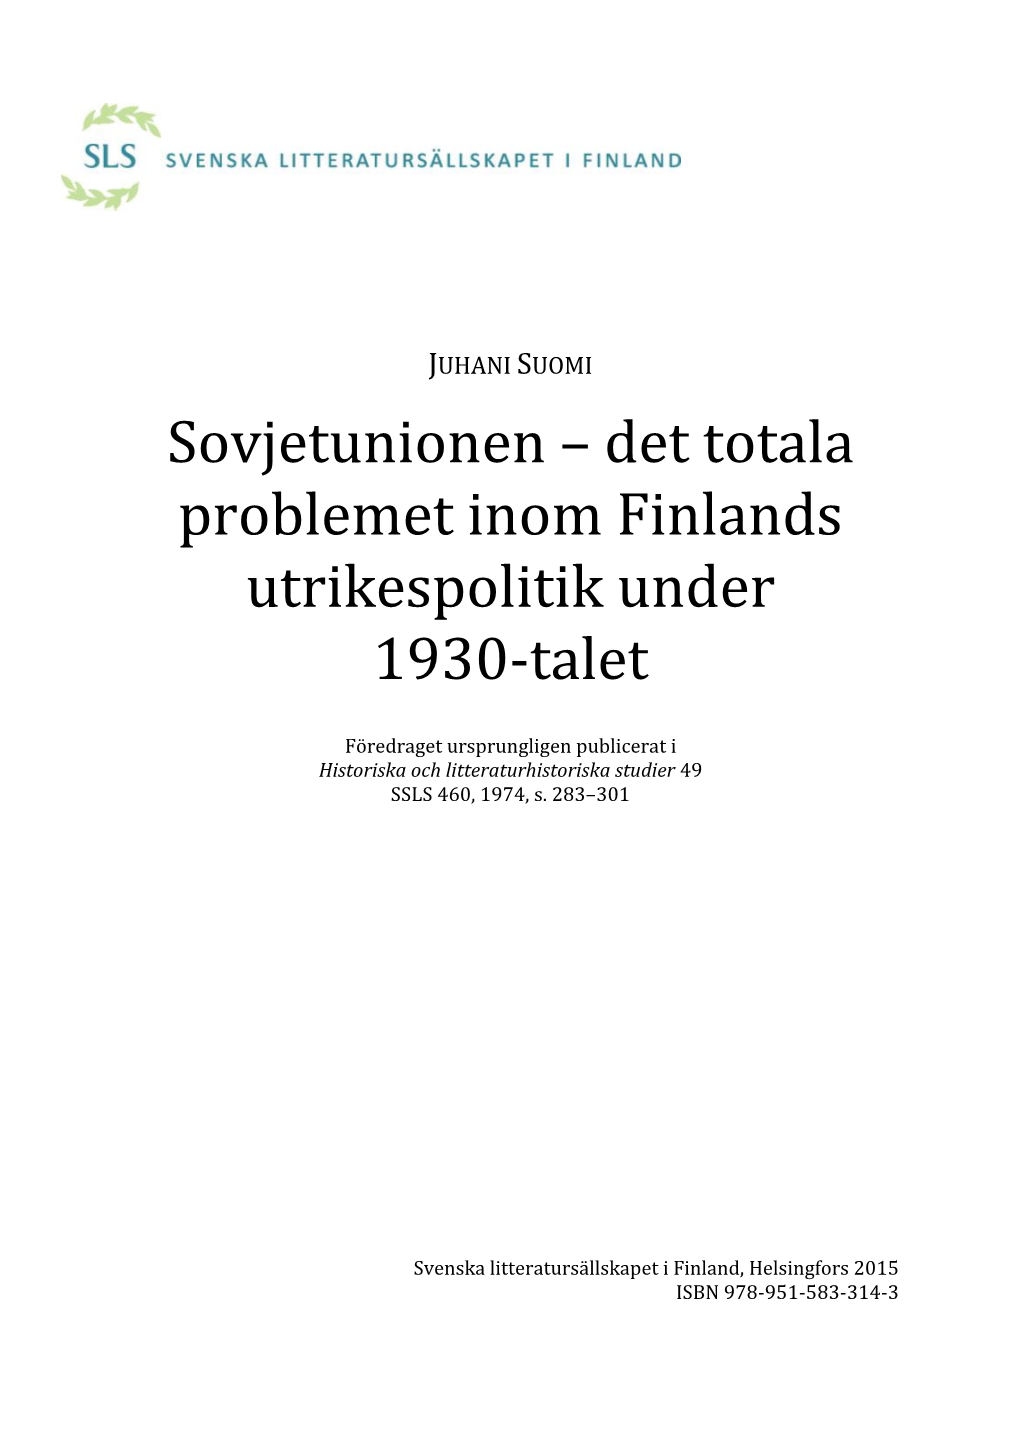 Det Totala Problemet Inom Finlands Utrikespolitik Under 1930-Talet